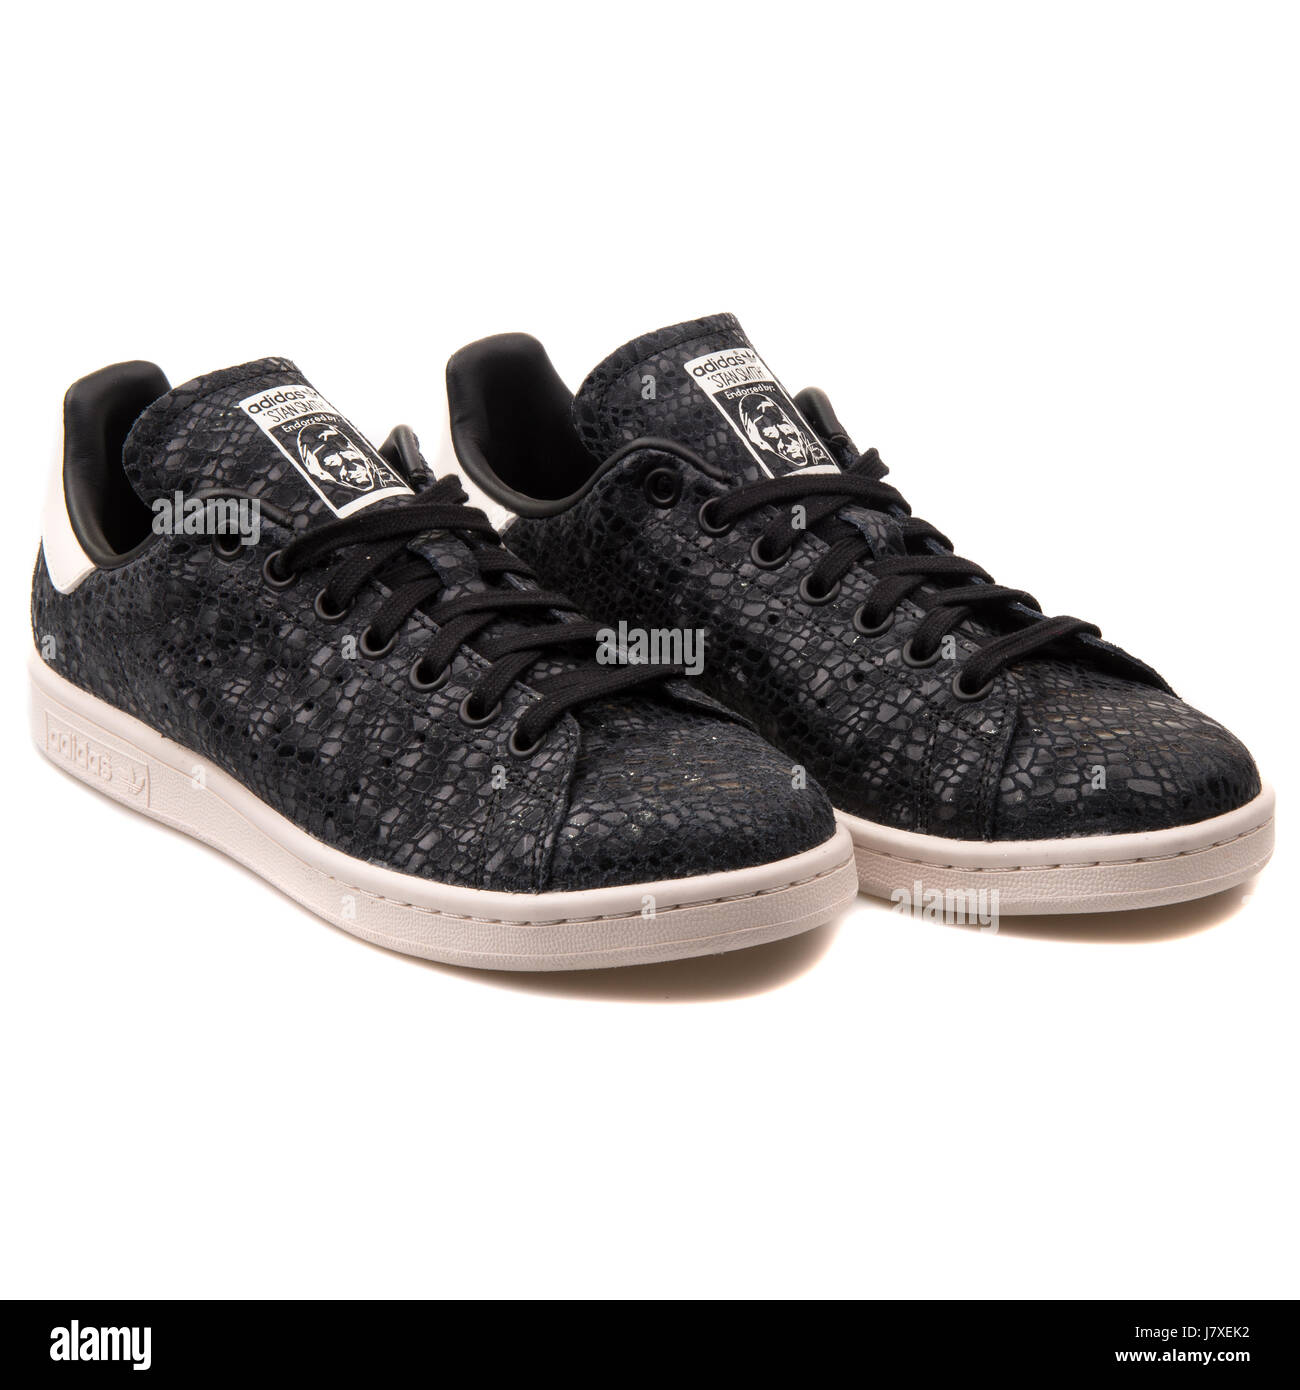 Adidas Stan Smith W Mujer Sneakers Negro - S77344 Fotografía de stock -  Alamy